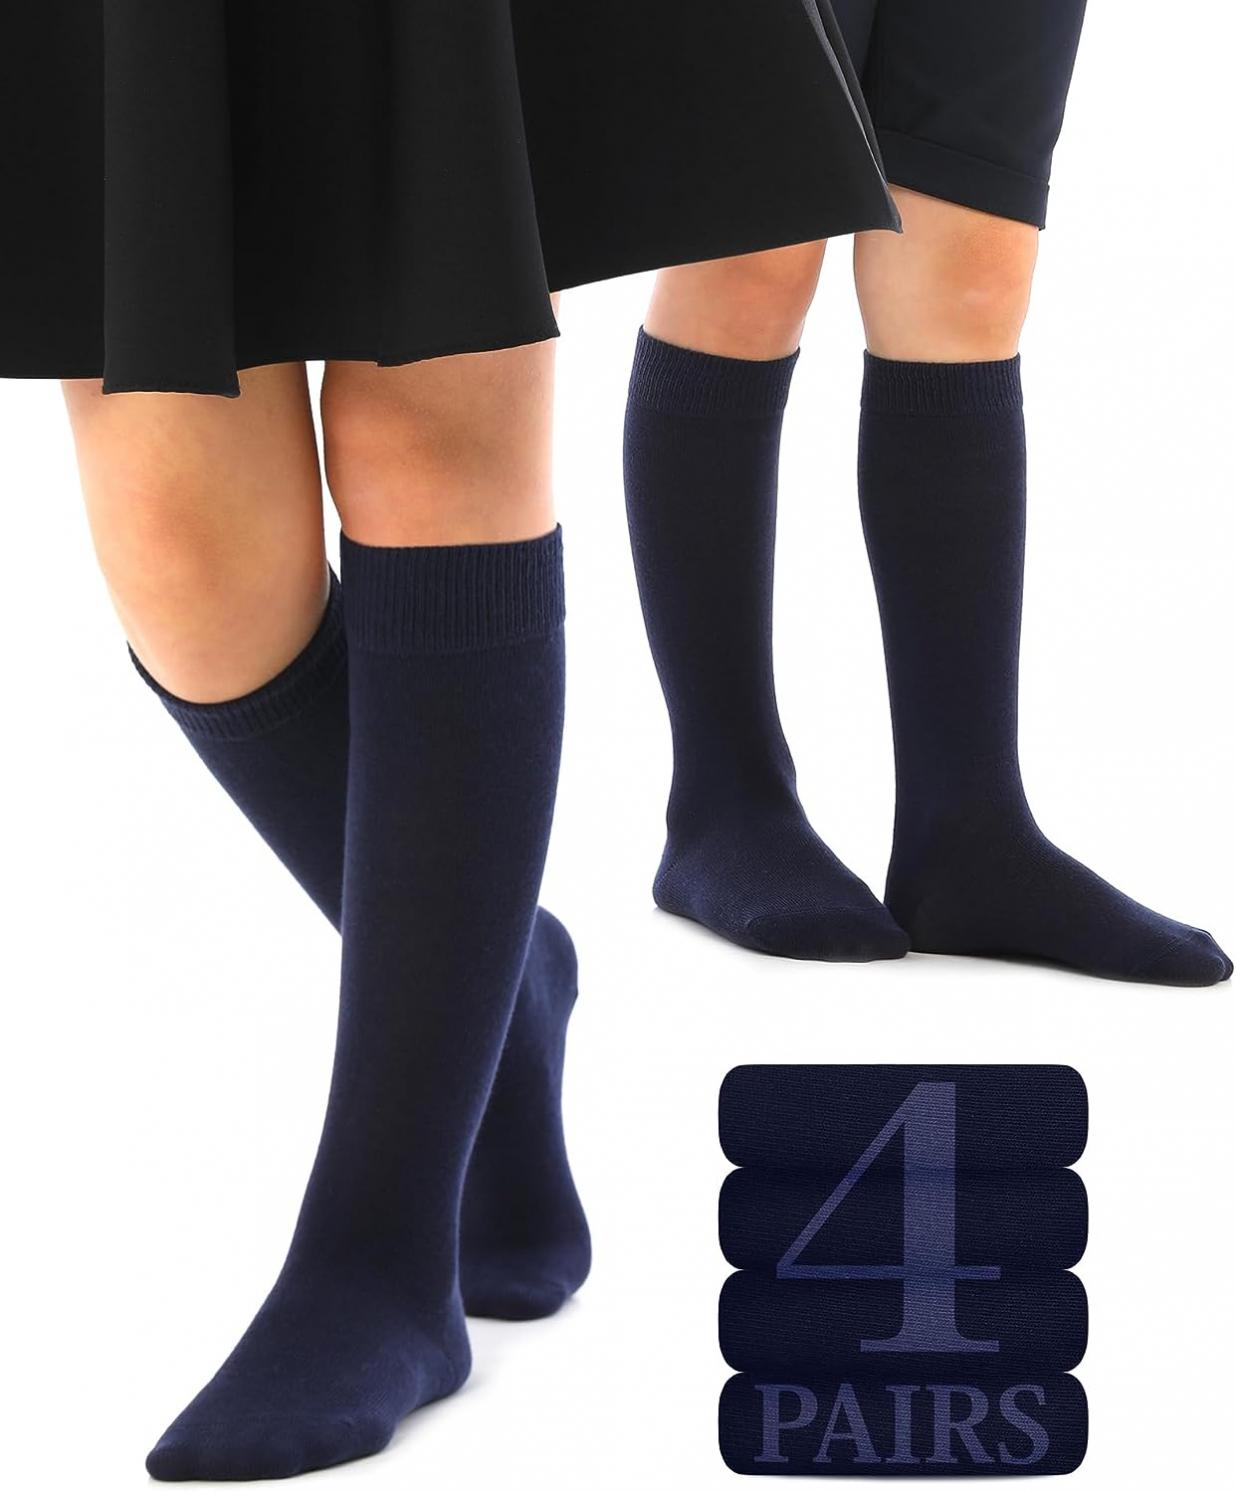 Hugh Ugoli Knee High Cotton Socks for Girls and Boys, Plain & Striped Long School Uniform Socks 3-14 Years Old, 4 Pairs